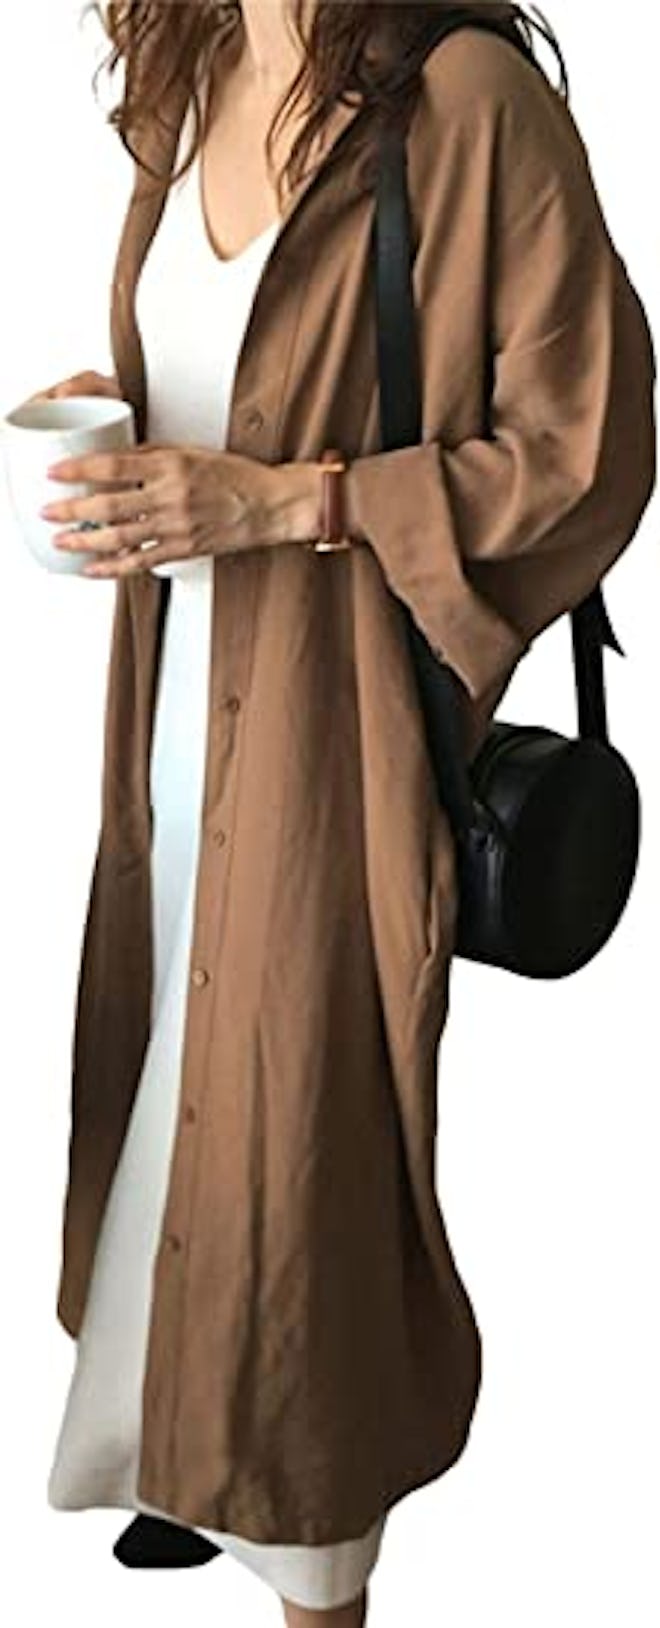 GGUHHU Rolled-Up Sleeve Maxi Dress